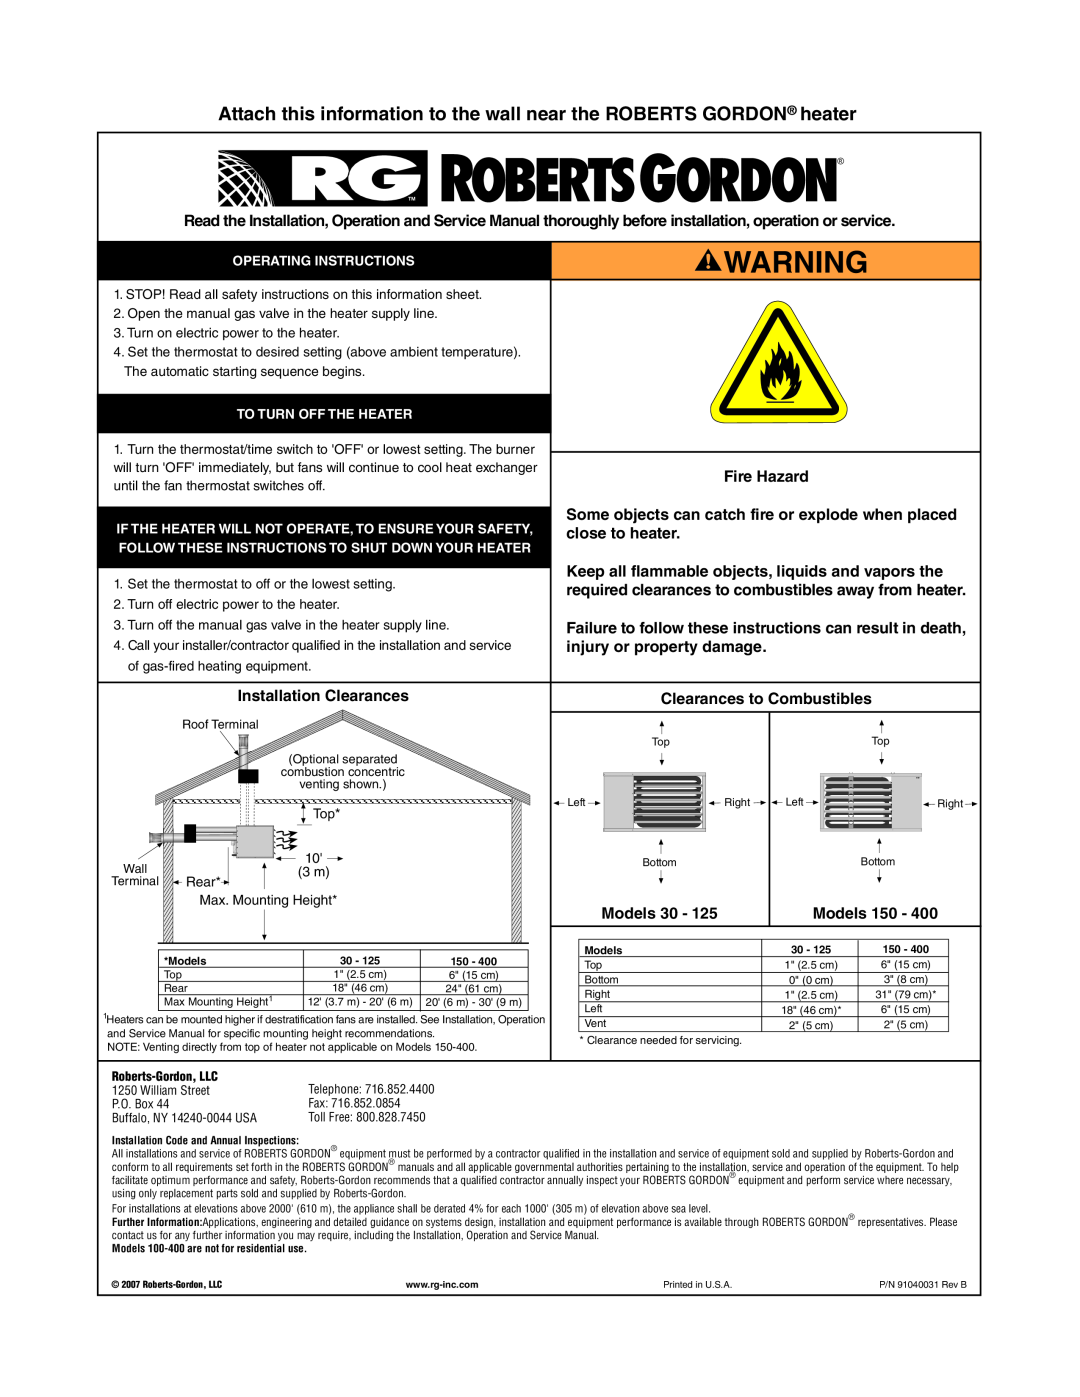 Roberts Gorden 400, 200, 350, 150, 300, 175, 225 250 service manual Fire Hazard 